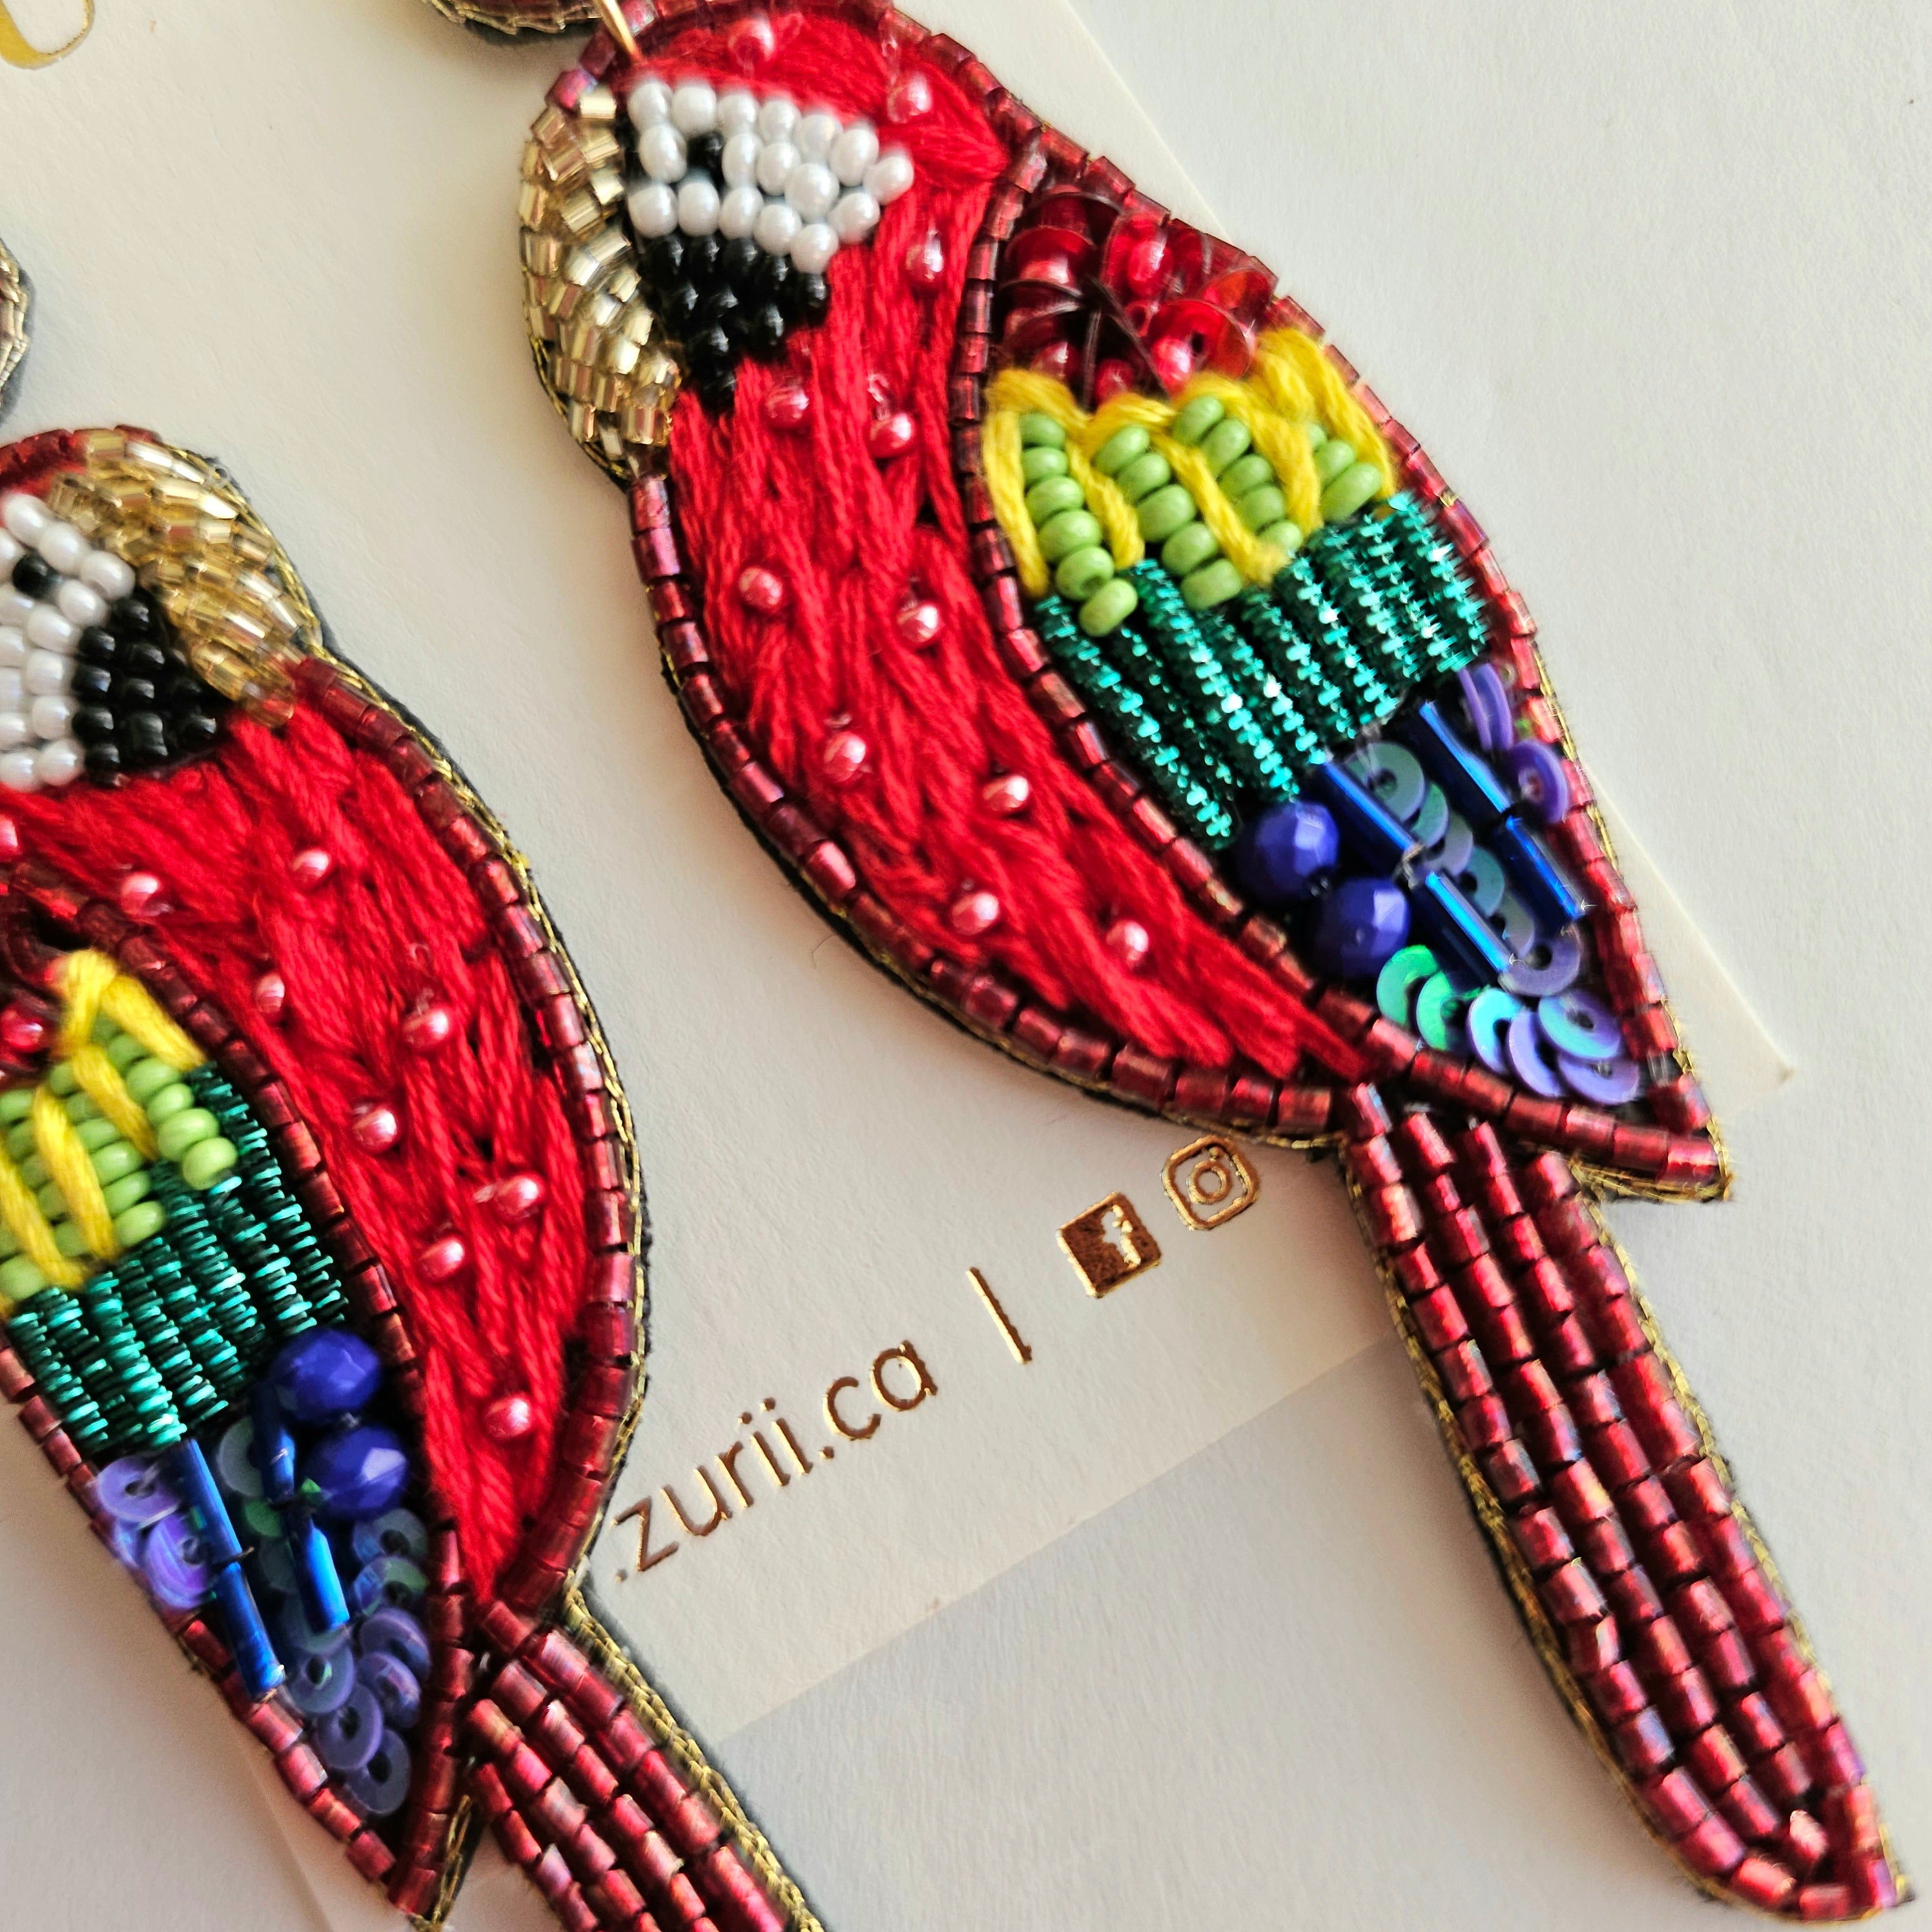 Red Macaw Earrings